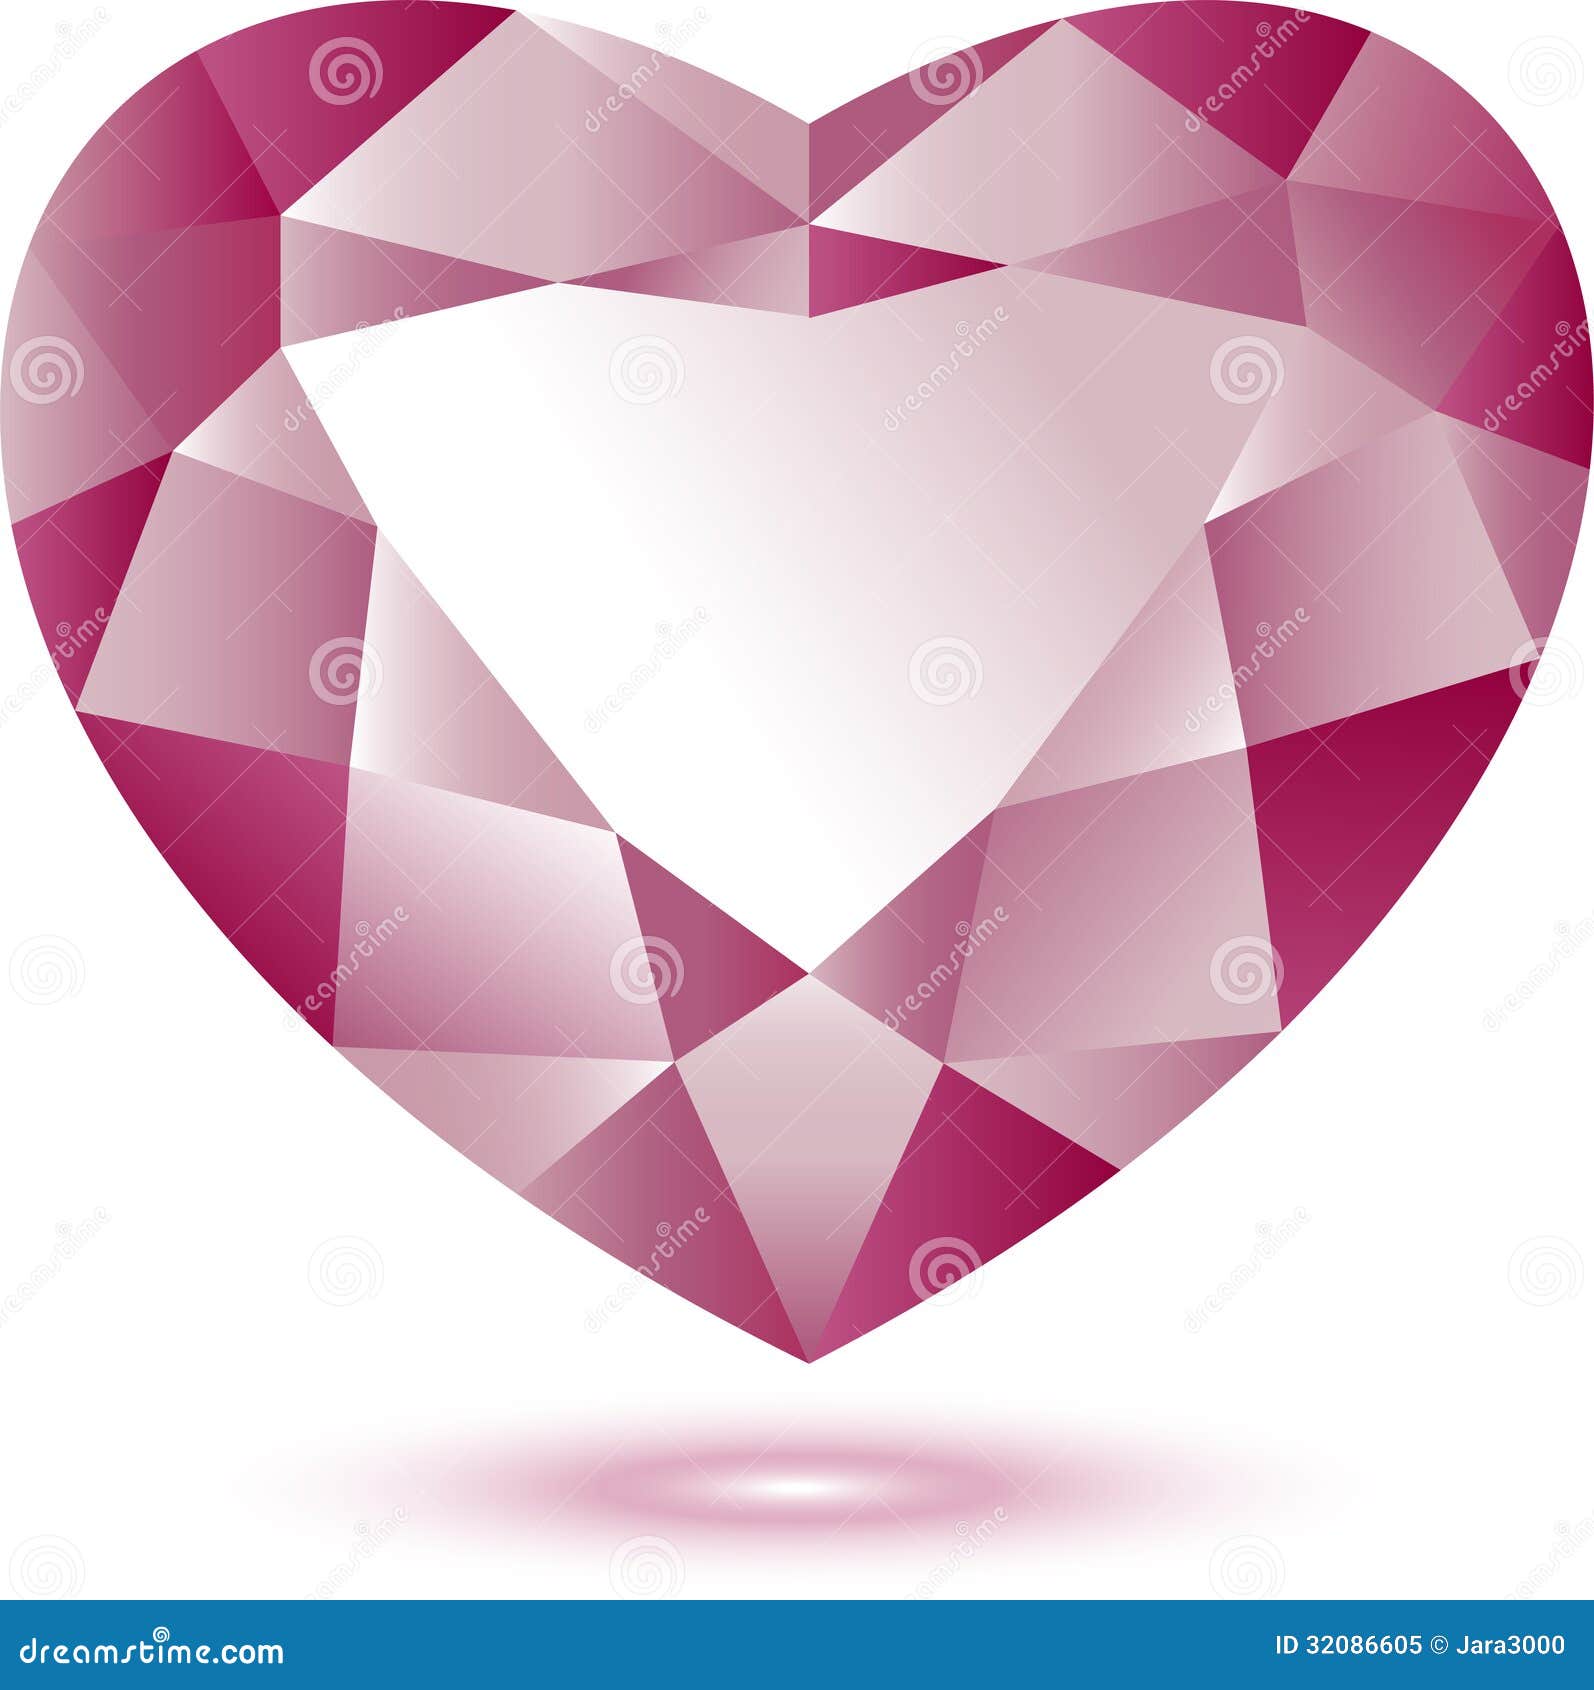 17,200+ Heart Gem Stock Illustrations, Royalty-Free Vector